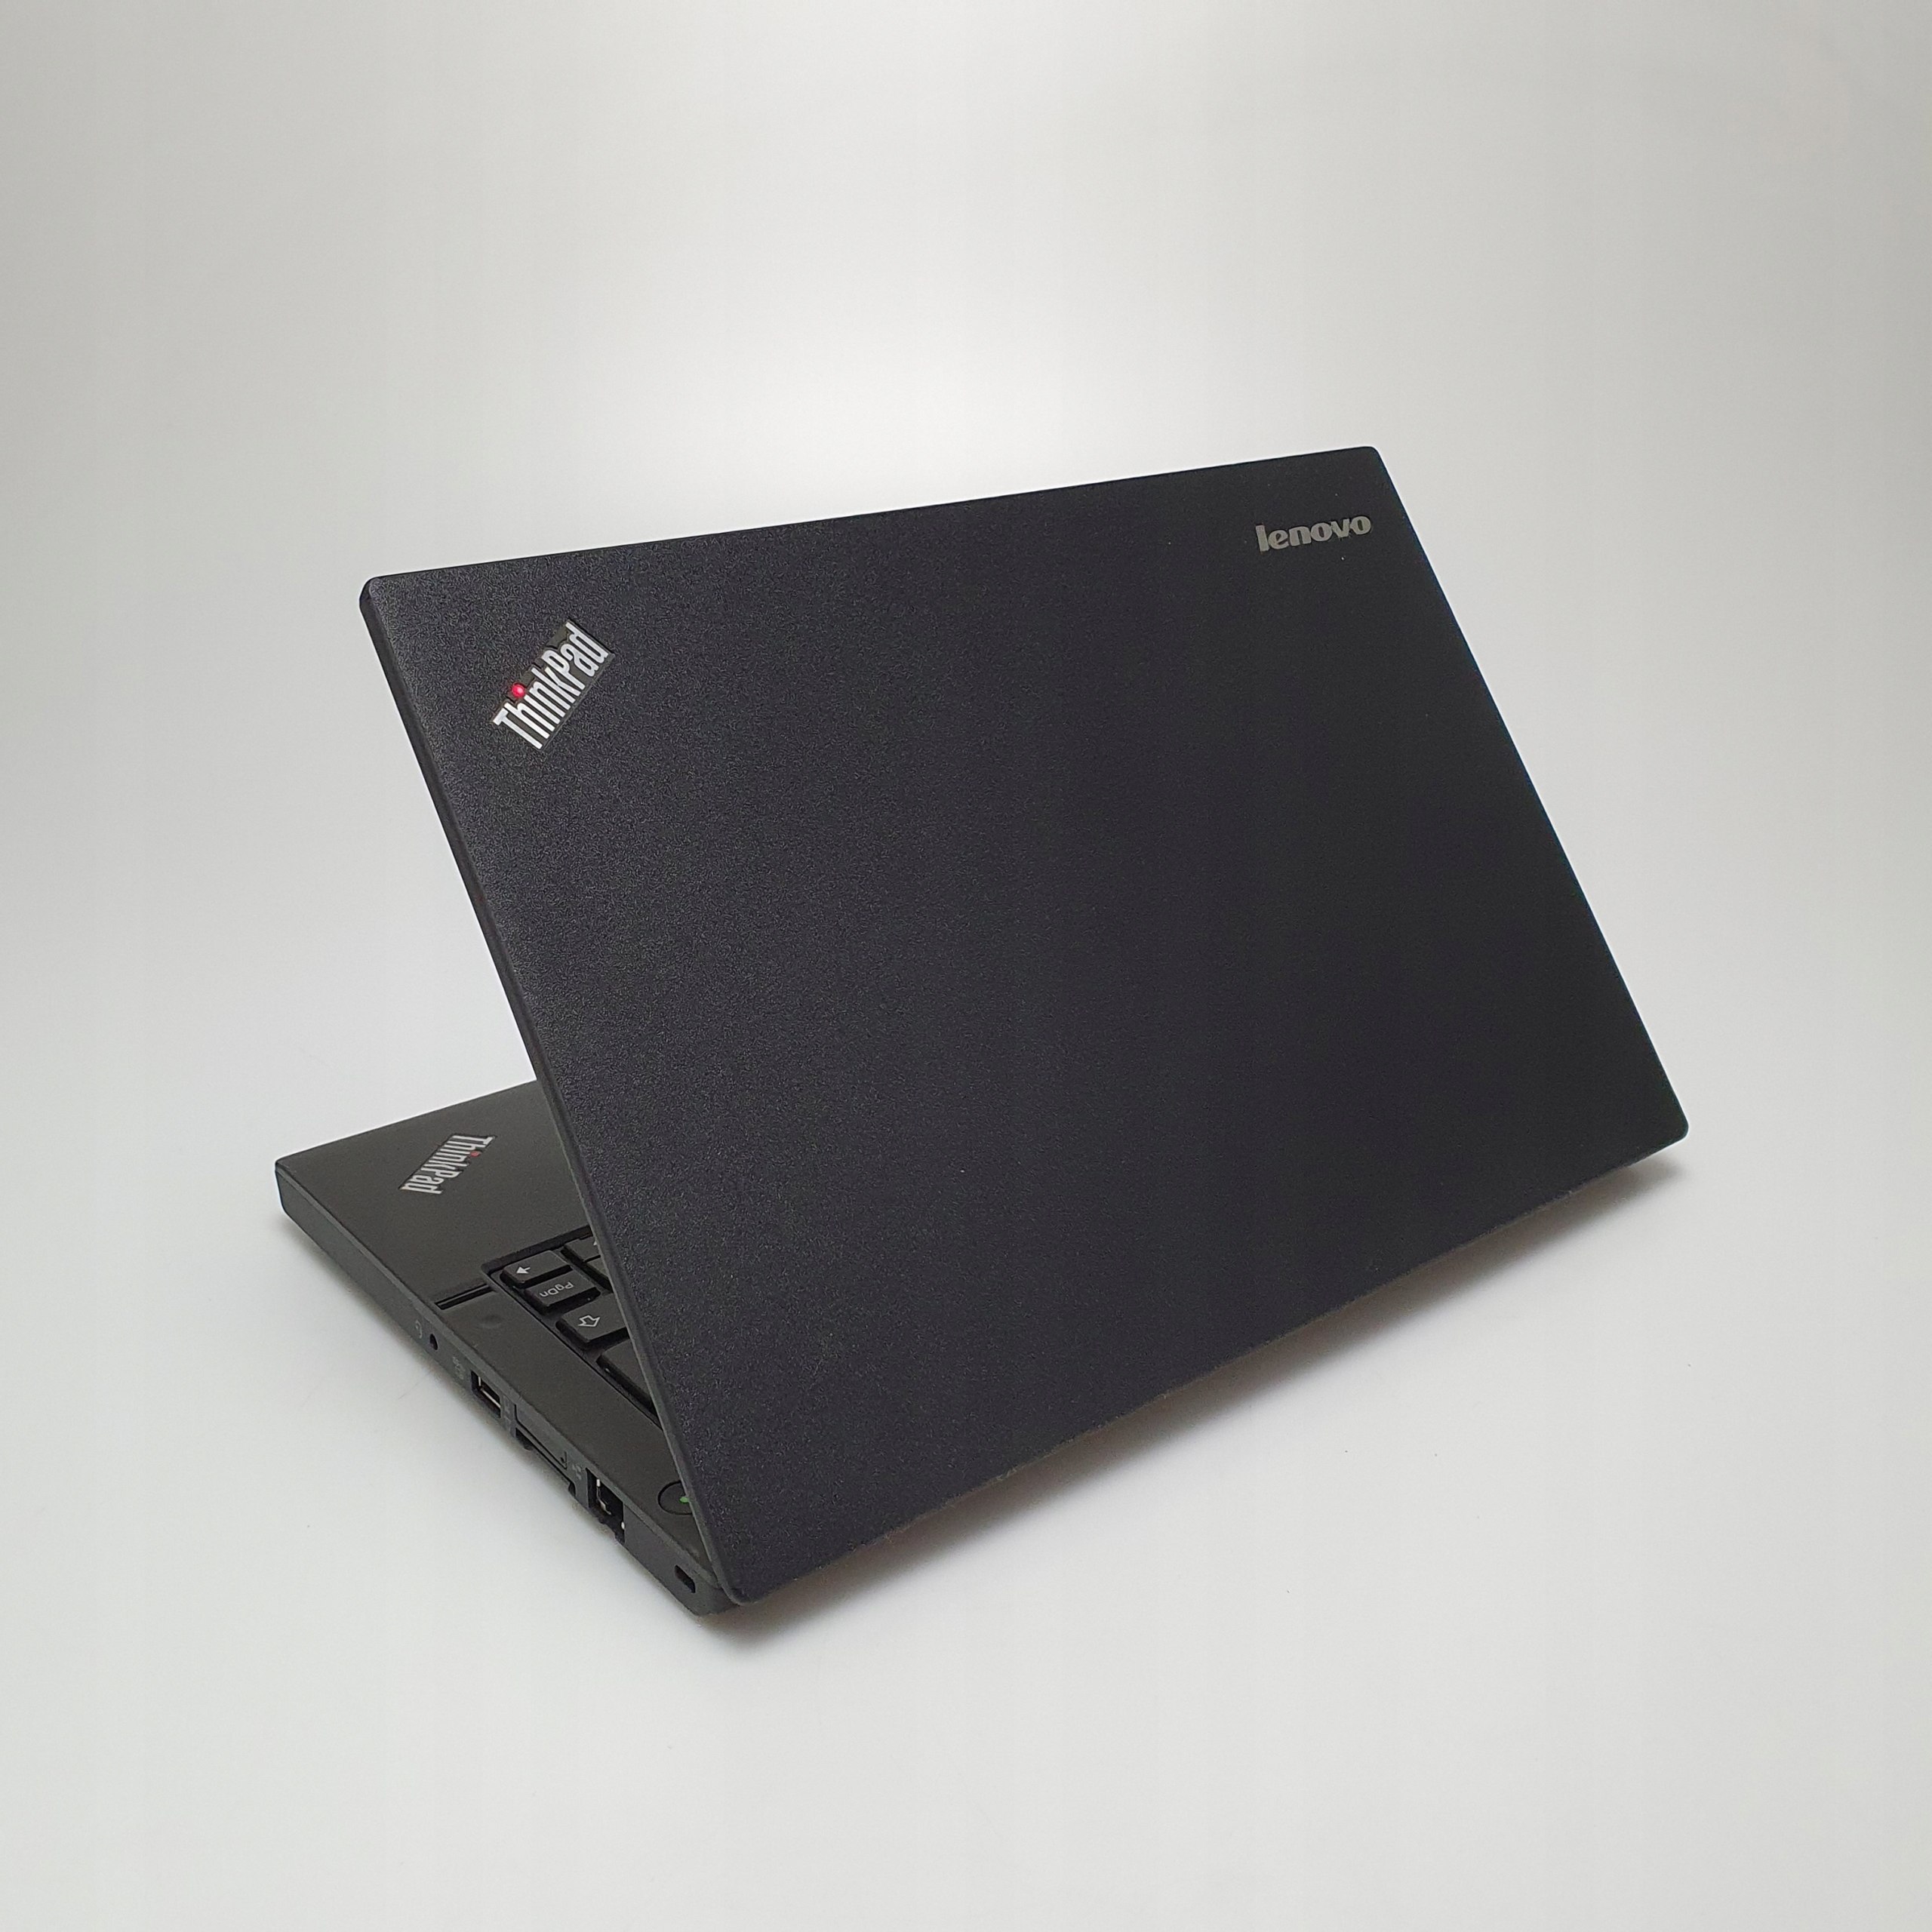 Laptop Lenovo X250 i5 8GB 500GB SATA Windows 10 Marka IBM, Lenovo